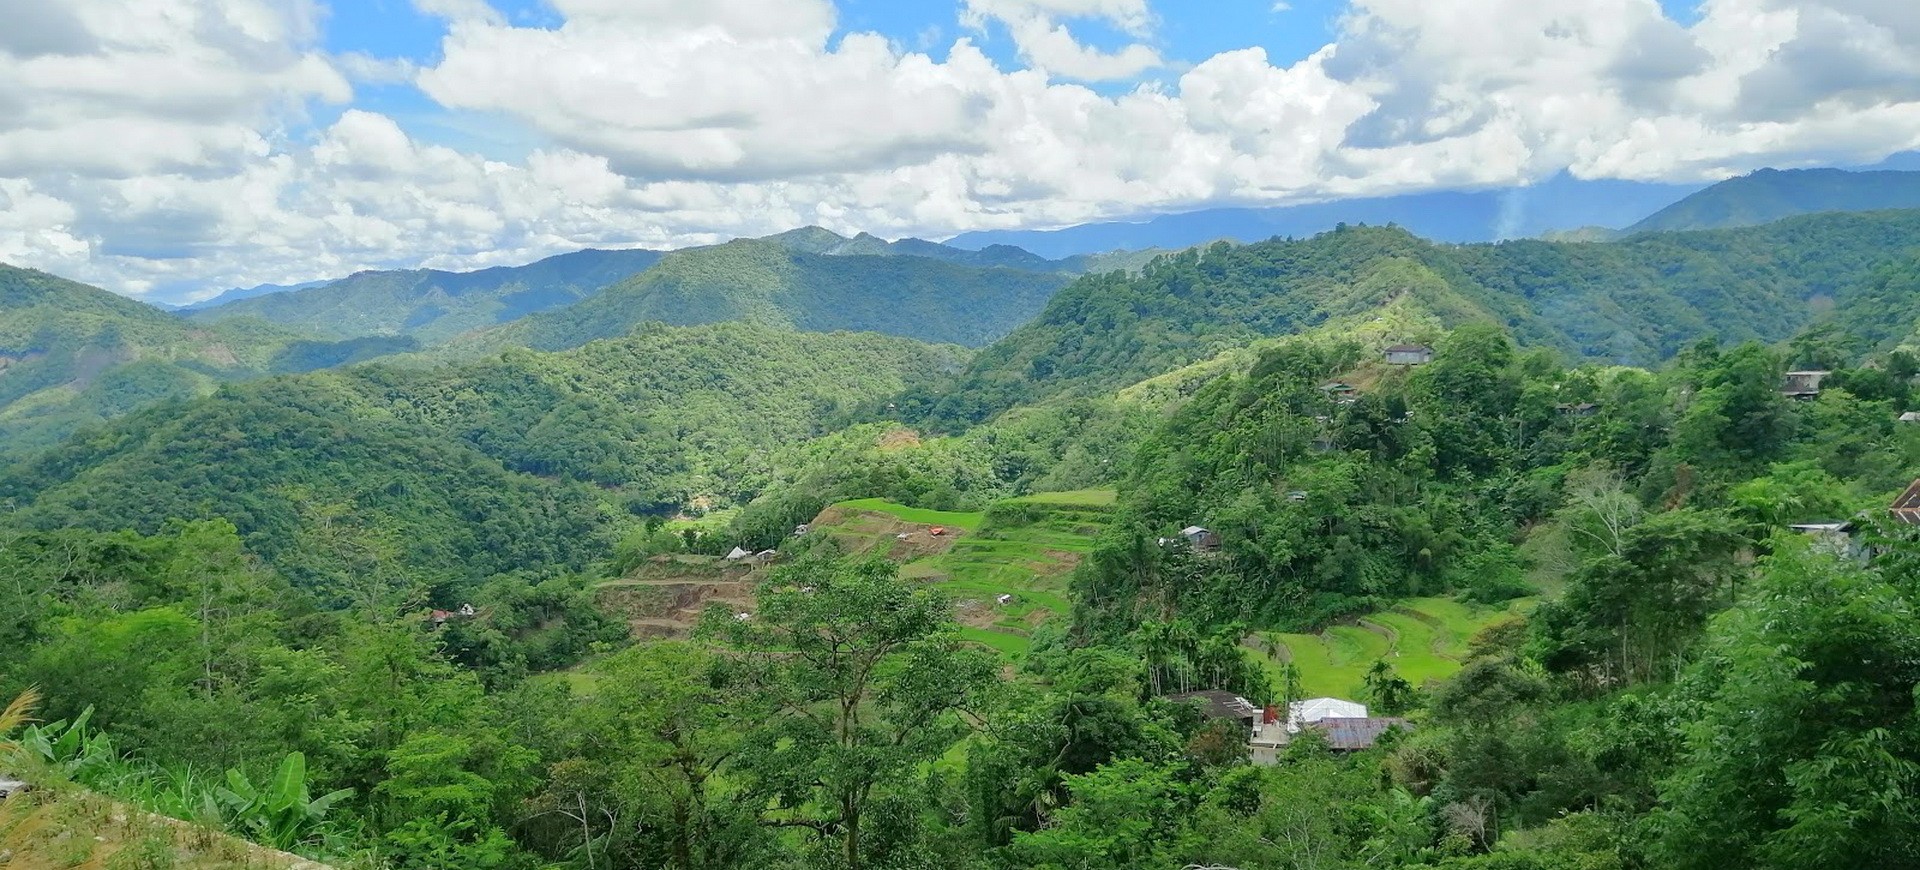 Philippines Kinakin région montagneuse